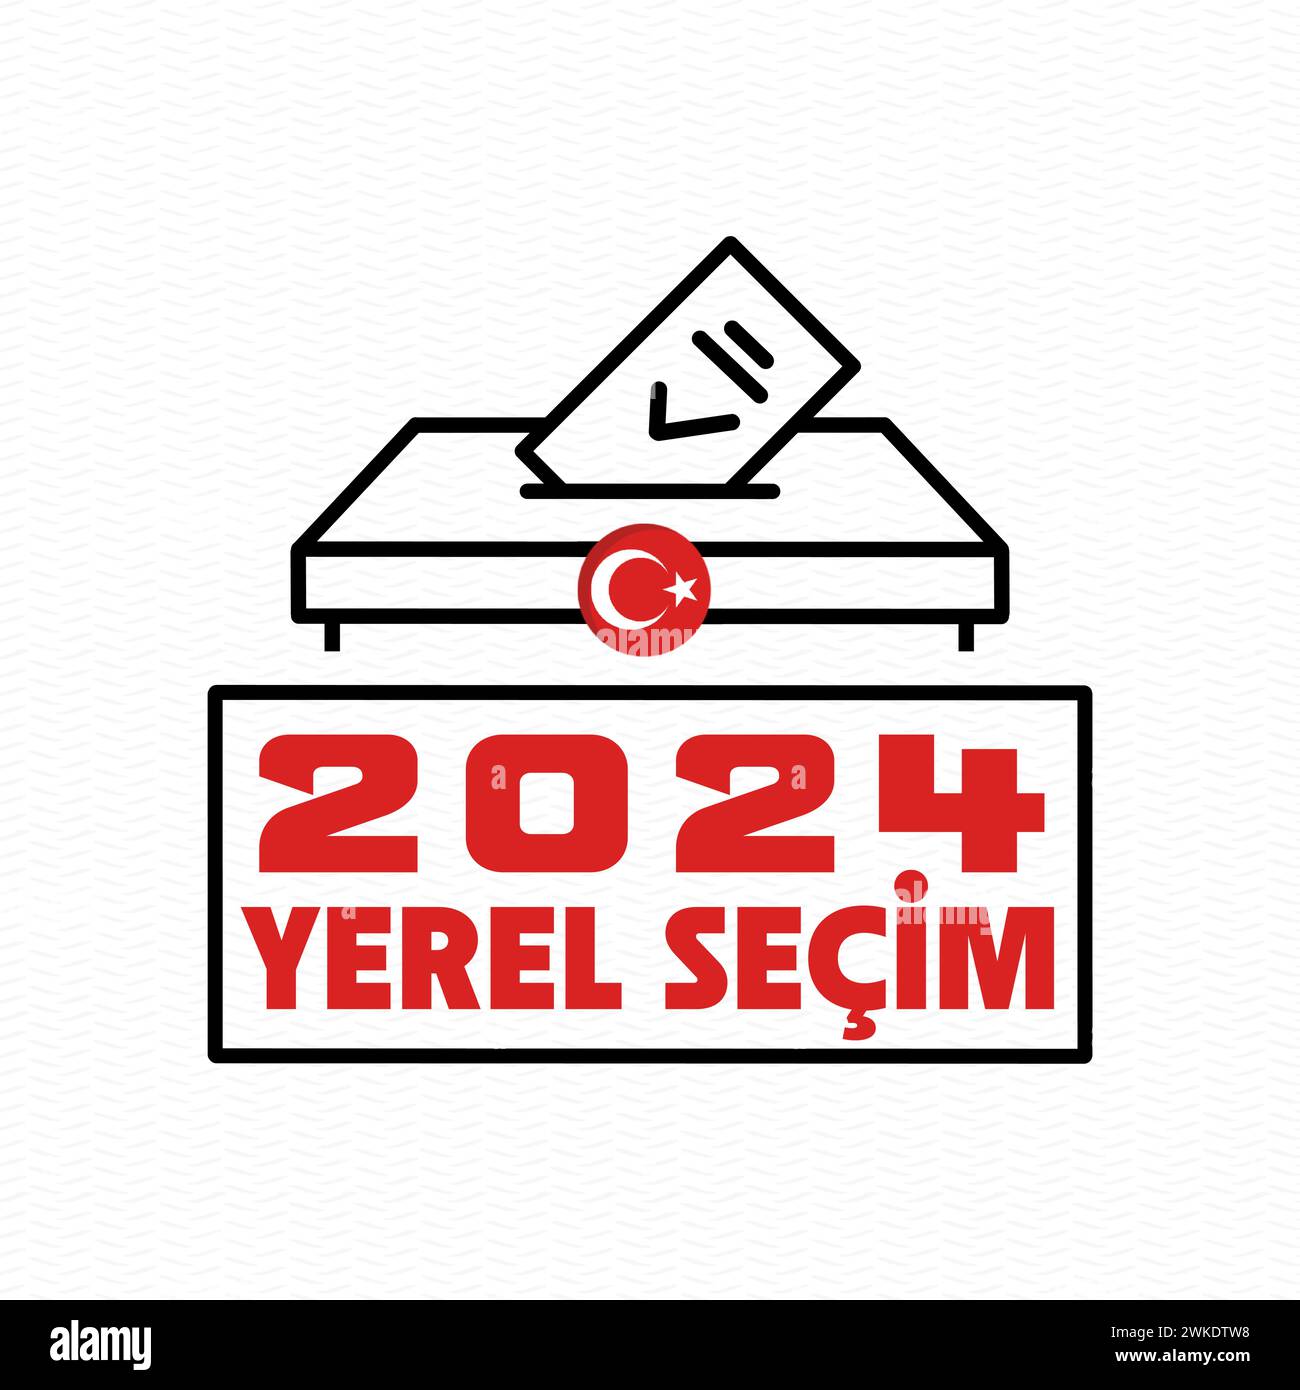 Campagne électorale locale turque : Türkiye Yerel seçimi kampanyası en langue turque. Élections municipales, Turkiye 2024 Illustration de Vecteur